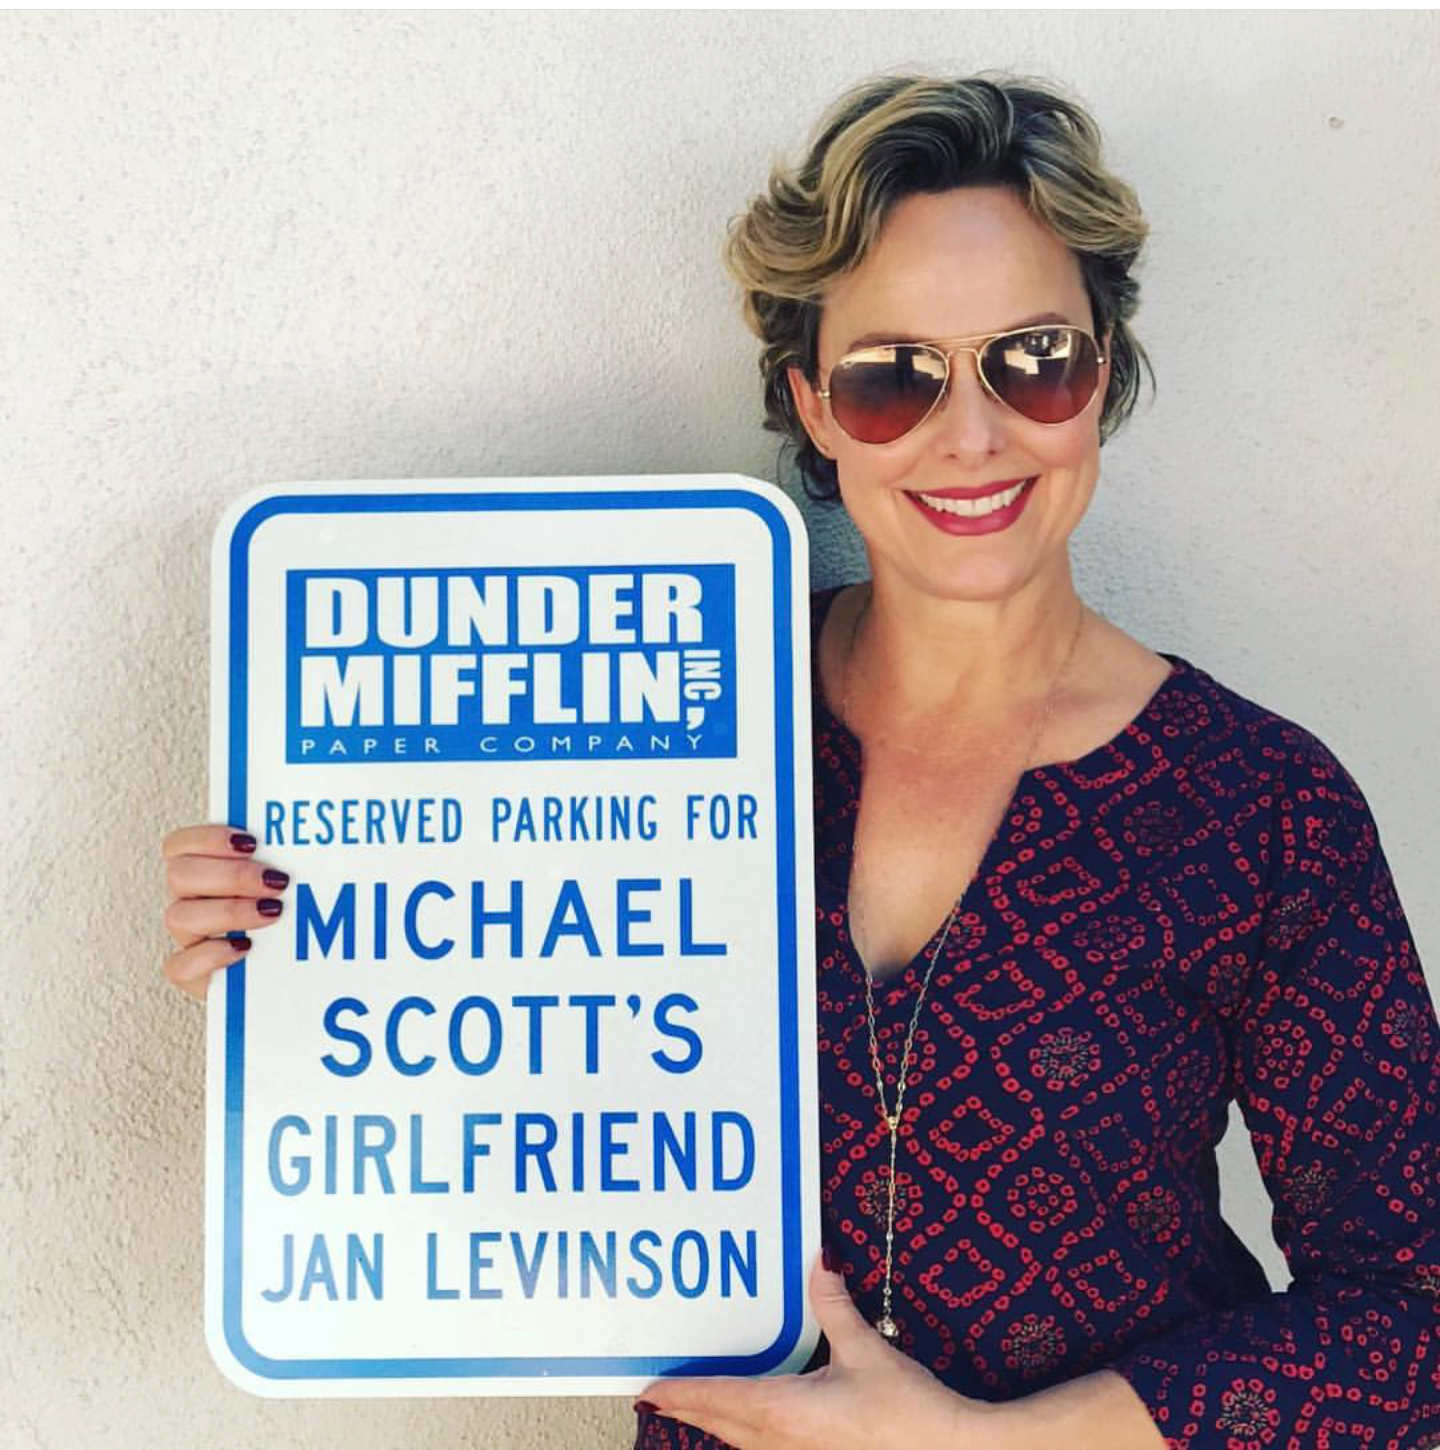 dunder mifflin - Paper Company Dunder Miffline Reserved Parking For Michael Scott'S Girlfriend Jan Levinson